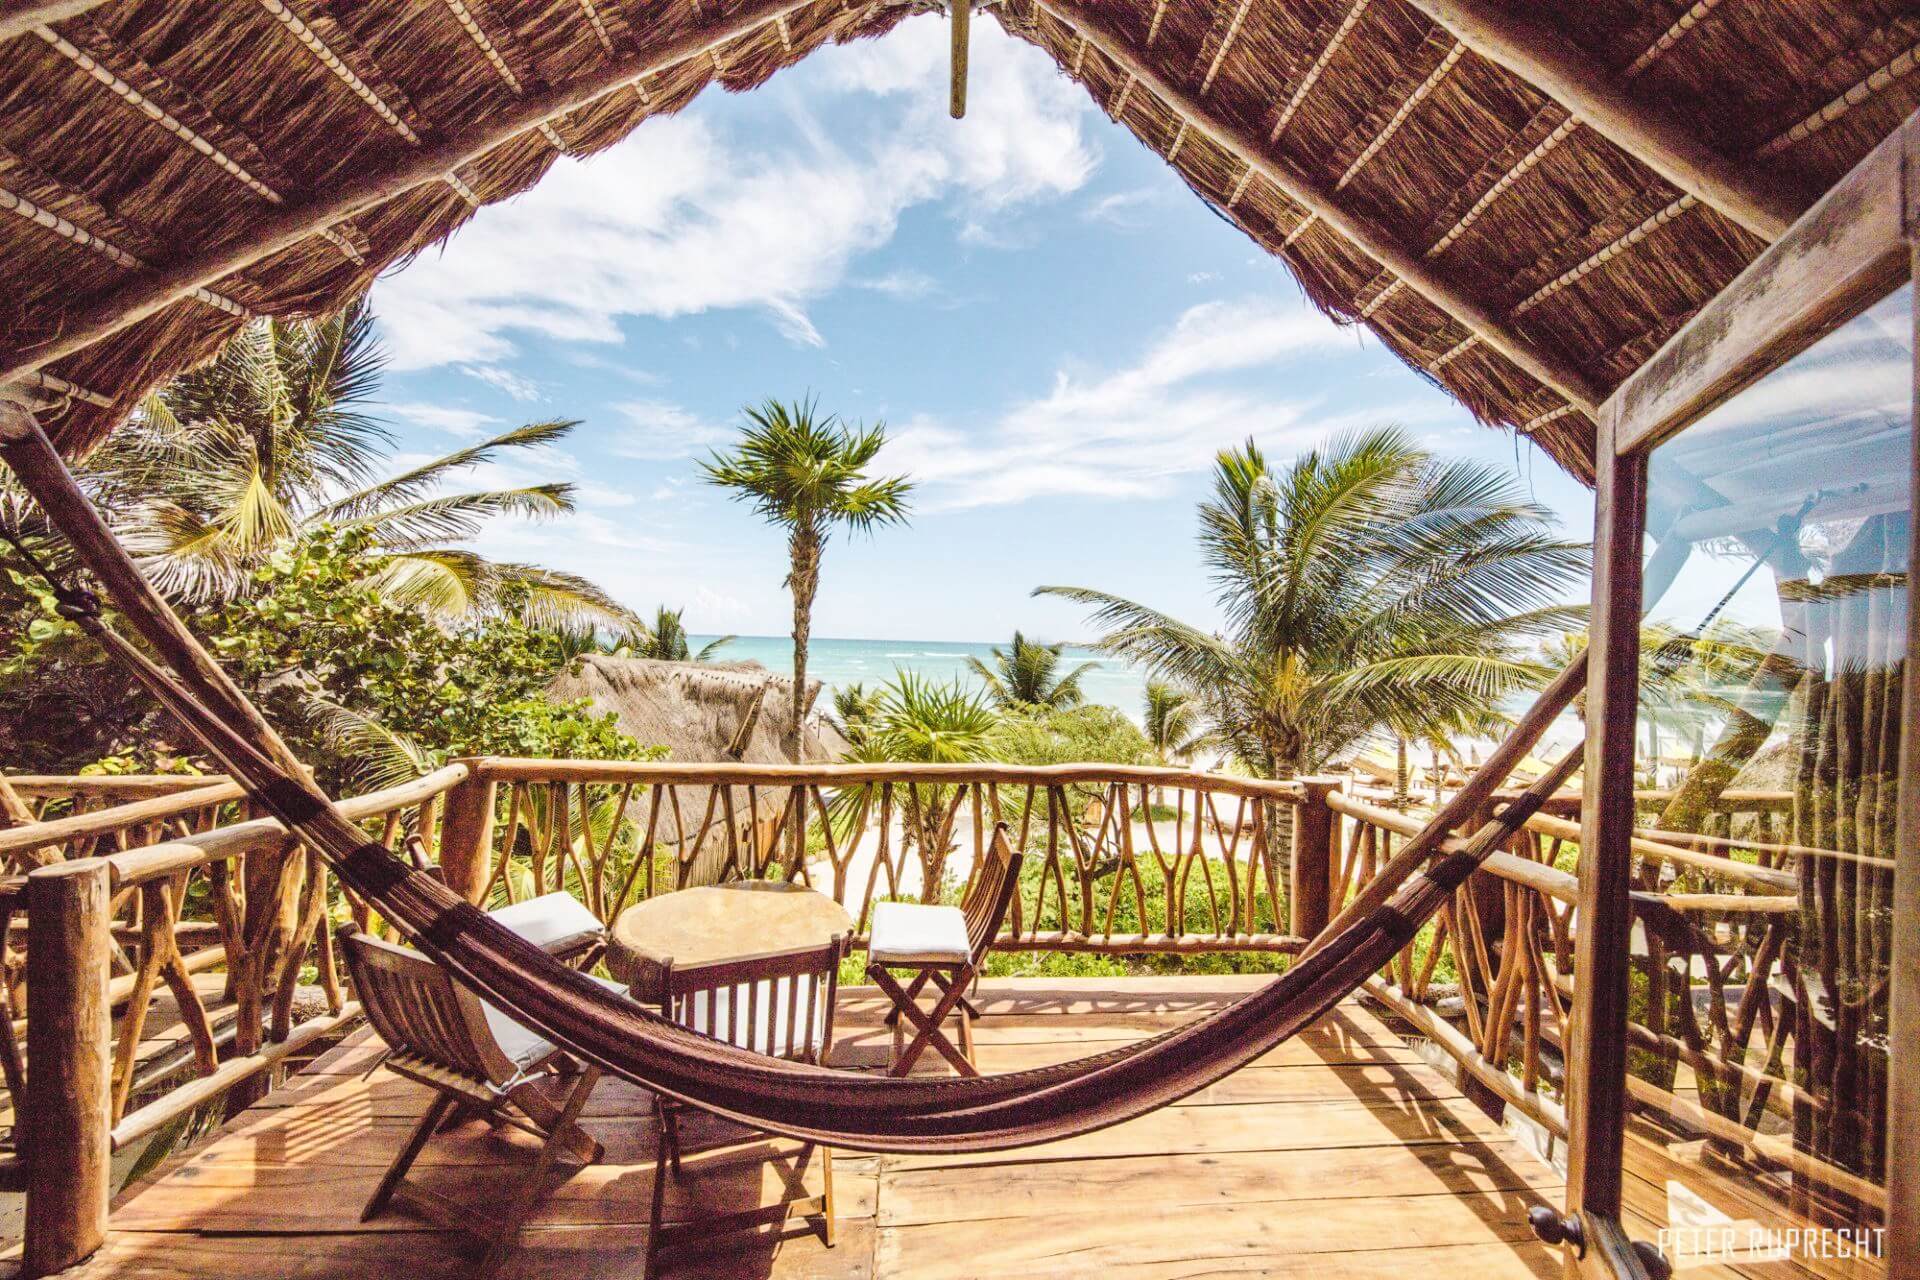 Kitesurf Hotels picture-perfect resort Tulum